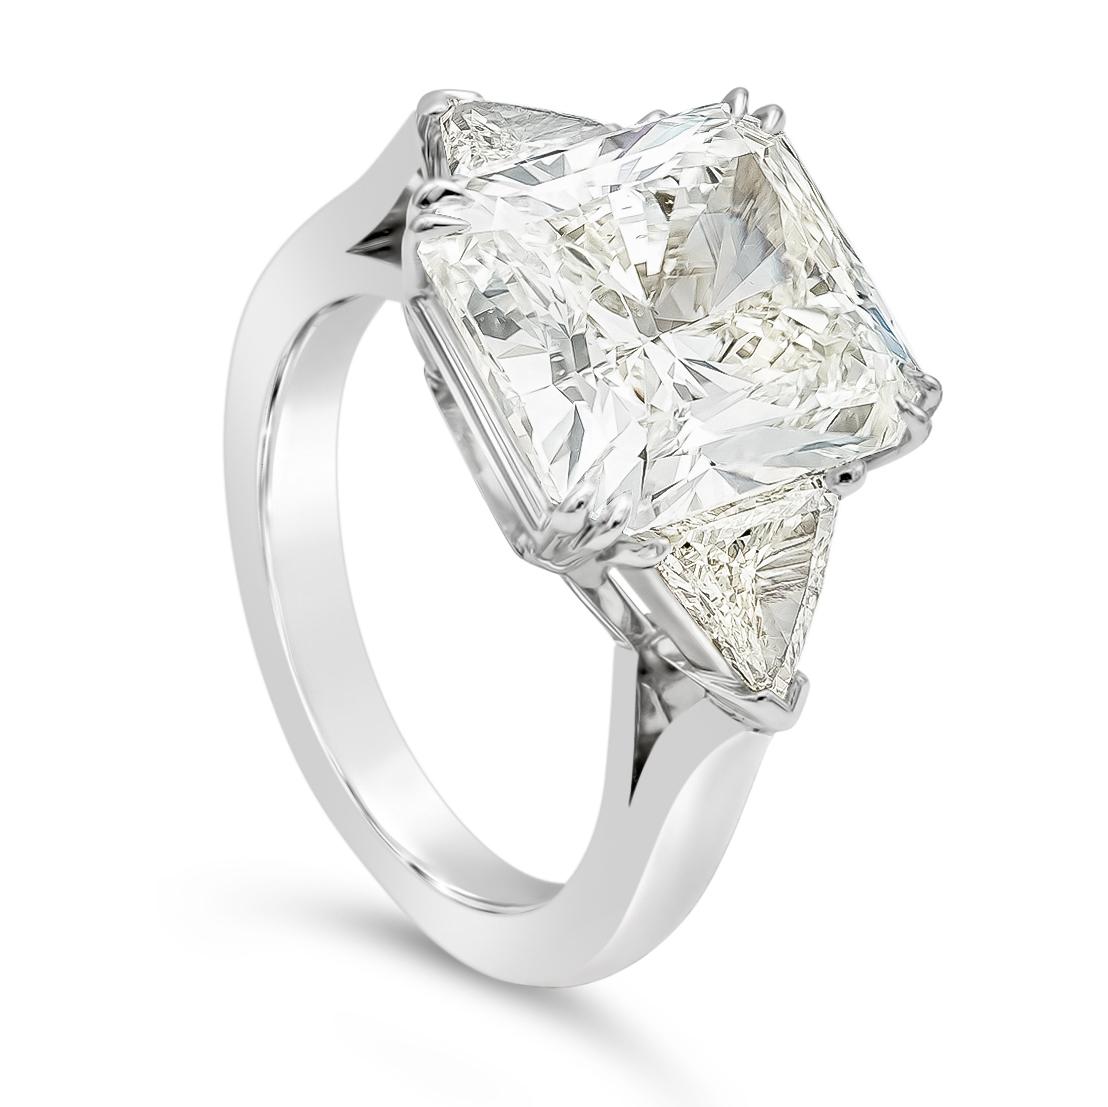 8 carat radiant cut diamond ring